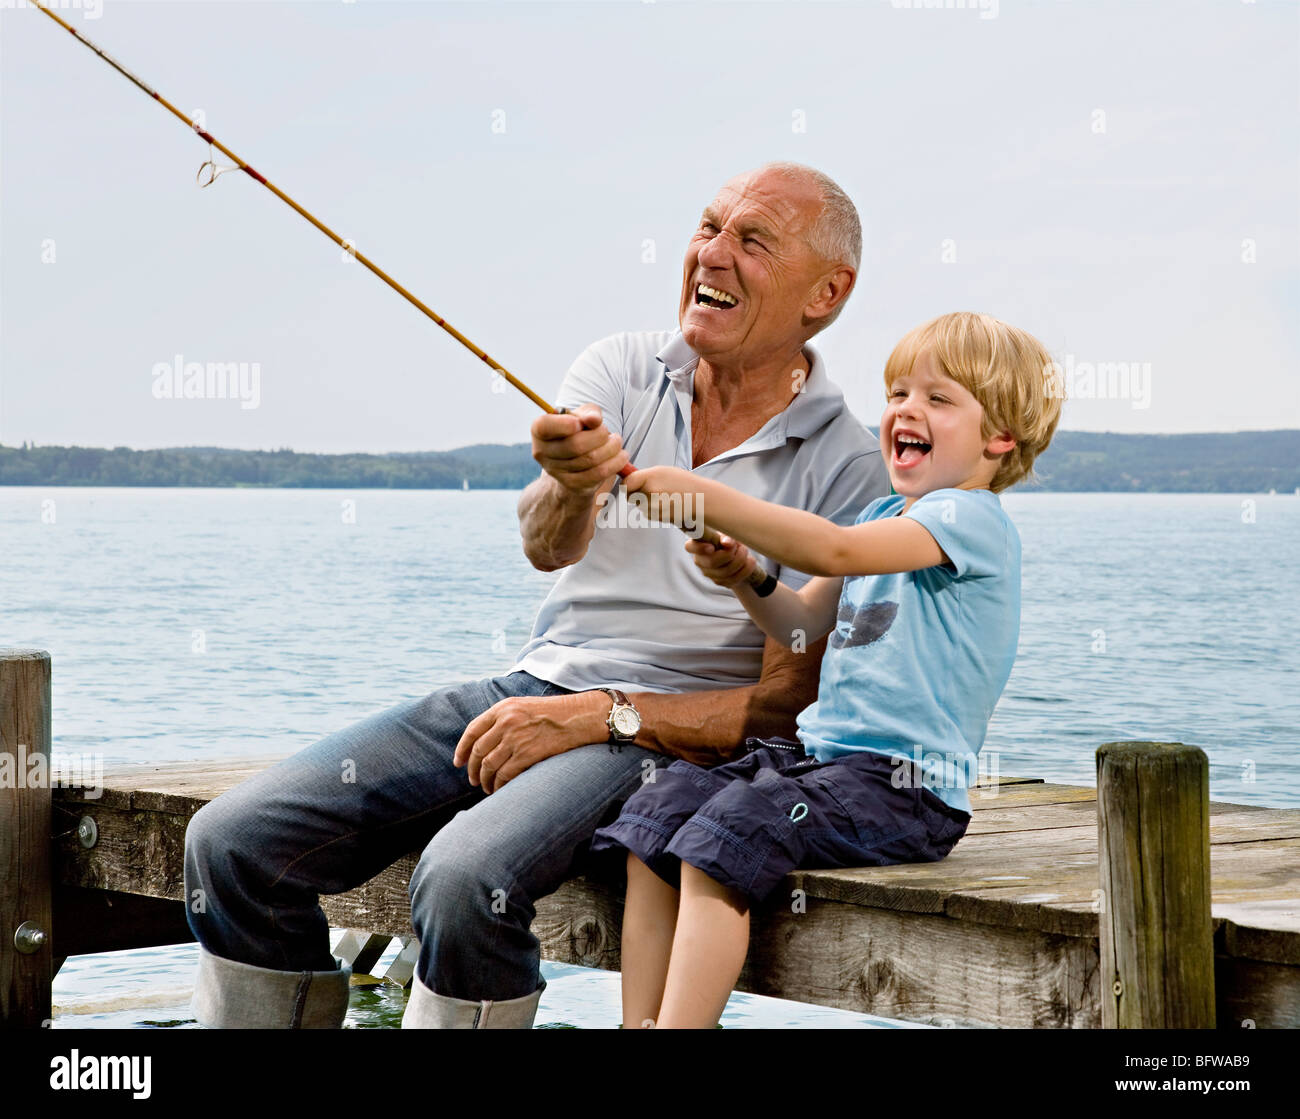 https://c8.alamy.com/comp/BFWAB9/boy-fishing-with-grandfather-at-lake-BFWAB9.jpg